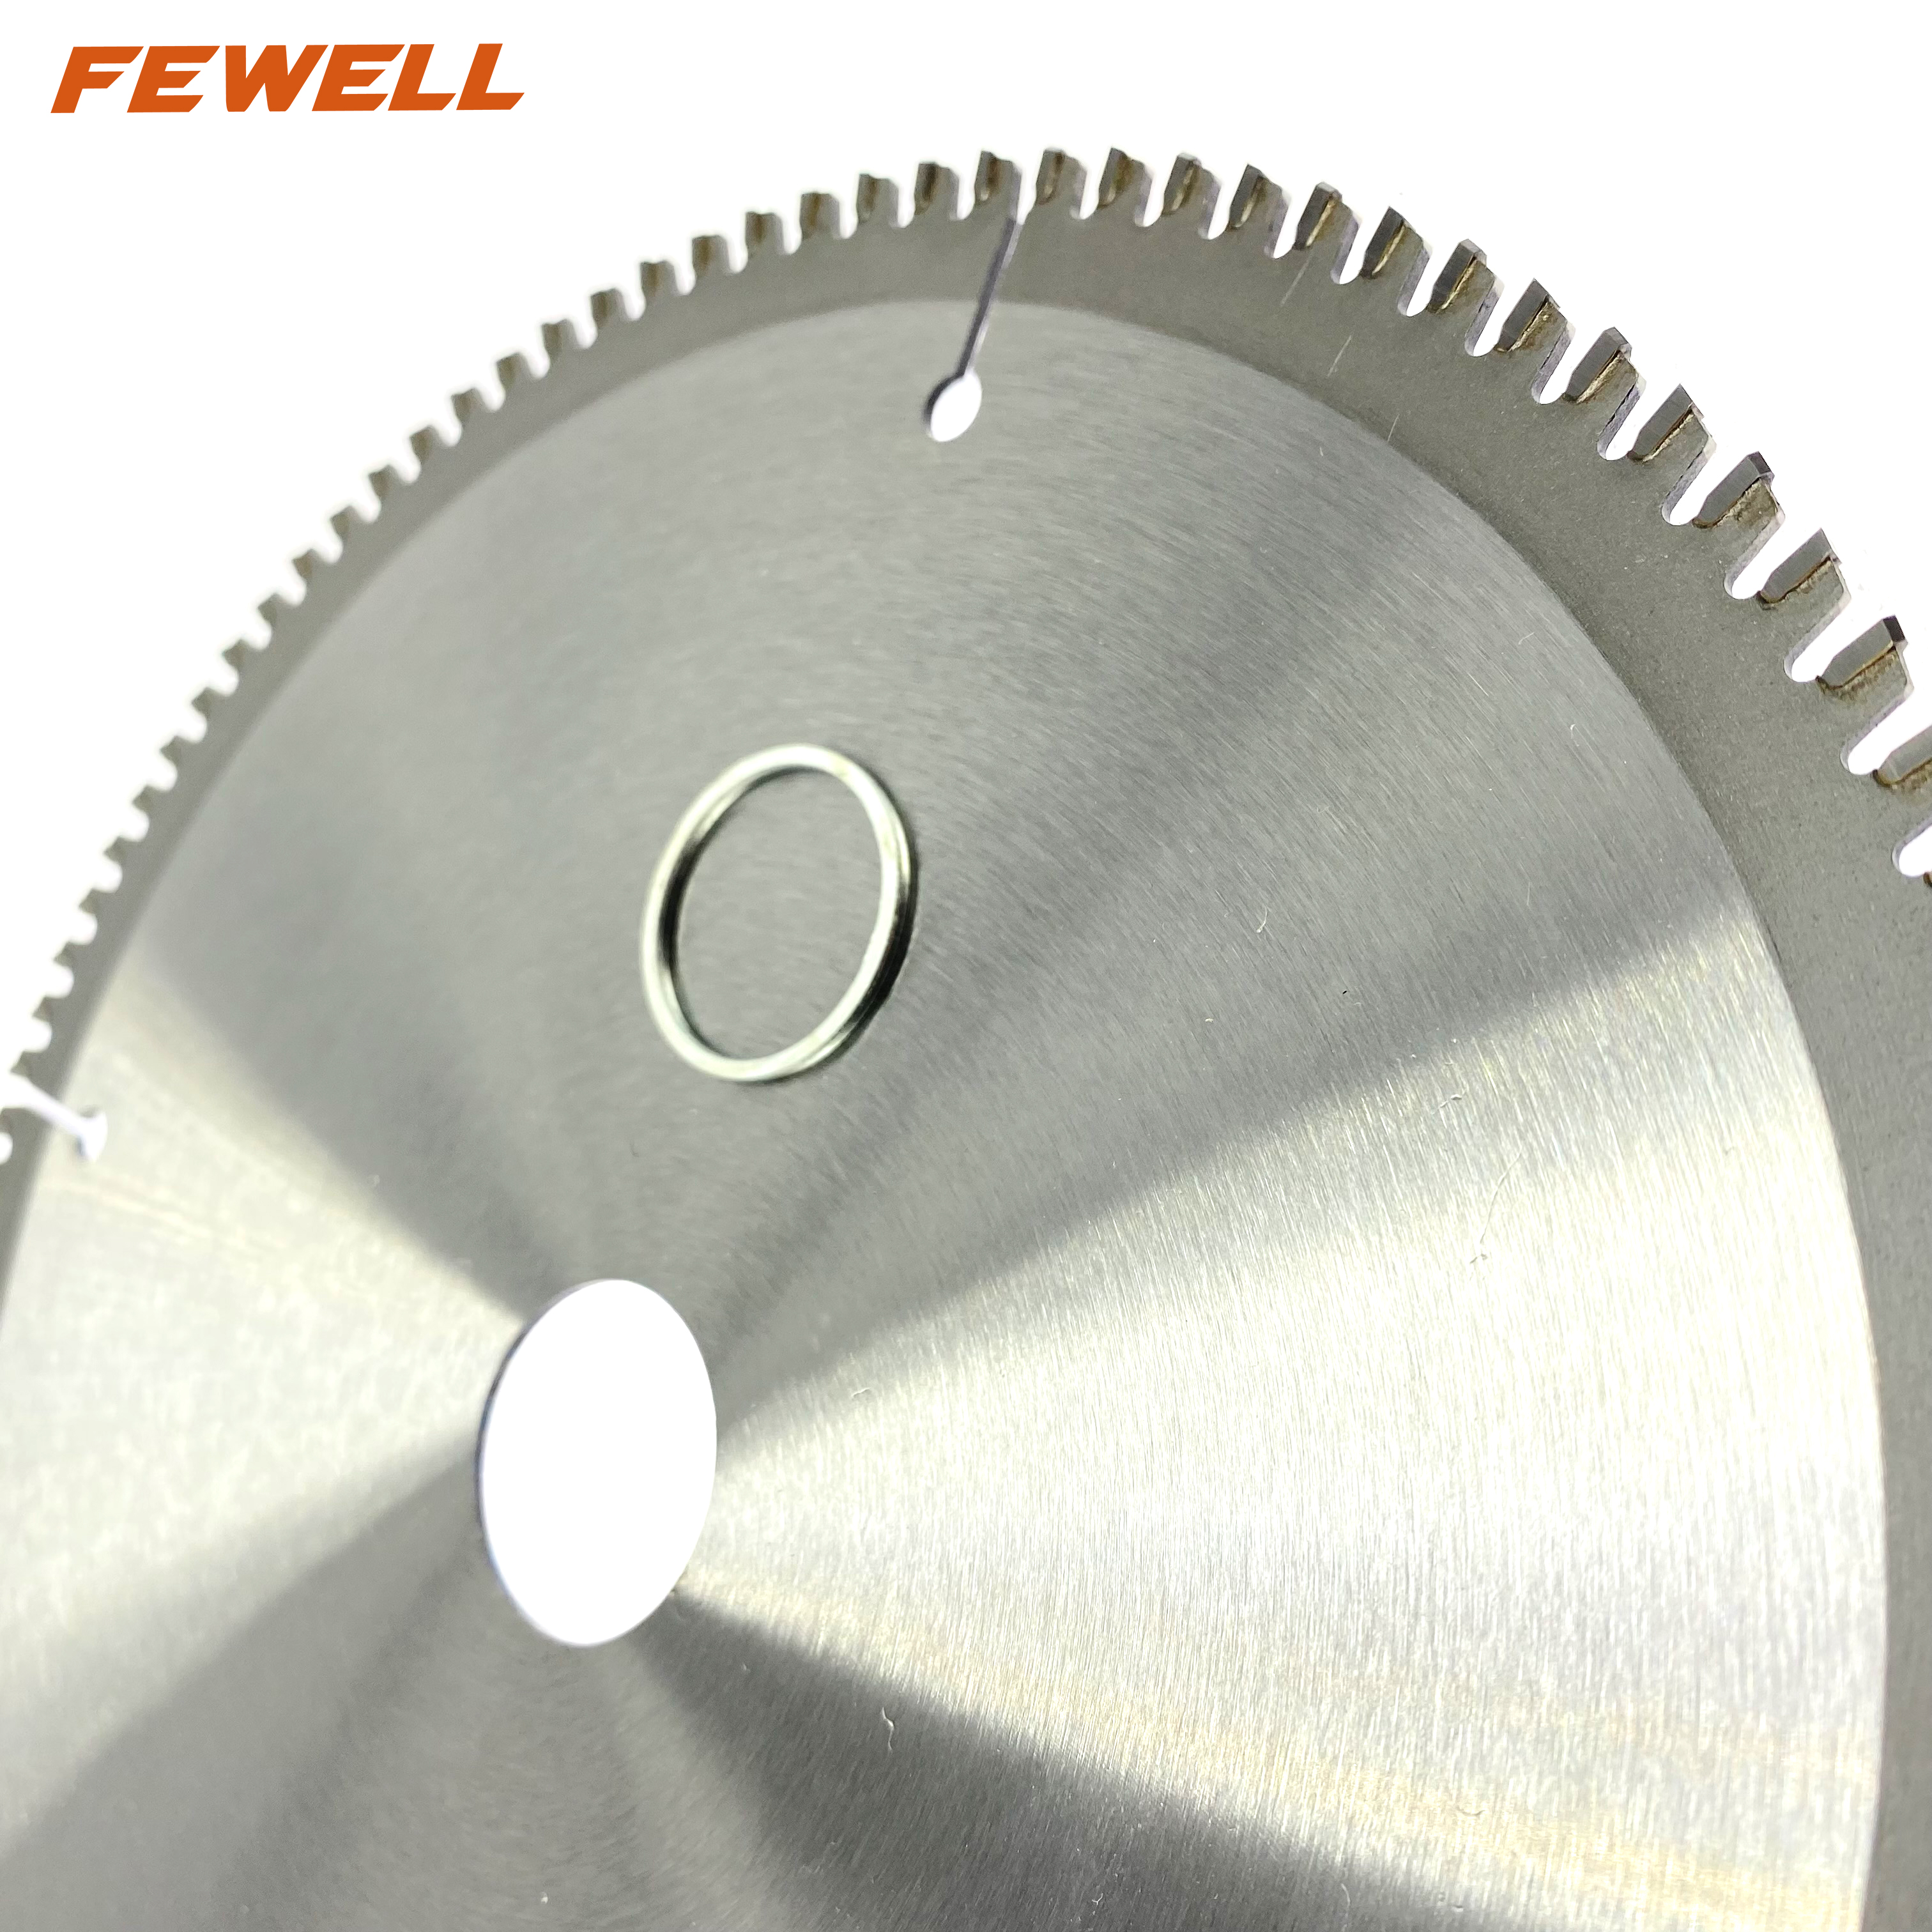 Hoja de sierra circular tct Koera de 8 pulgadas 205*100T*25,4mm para cortar aluminio